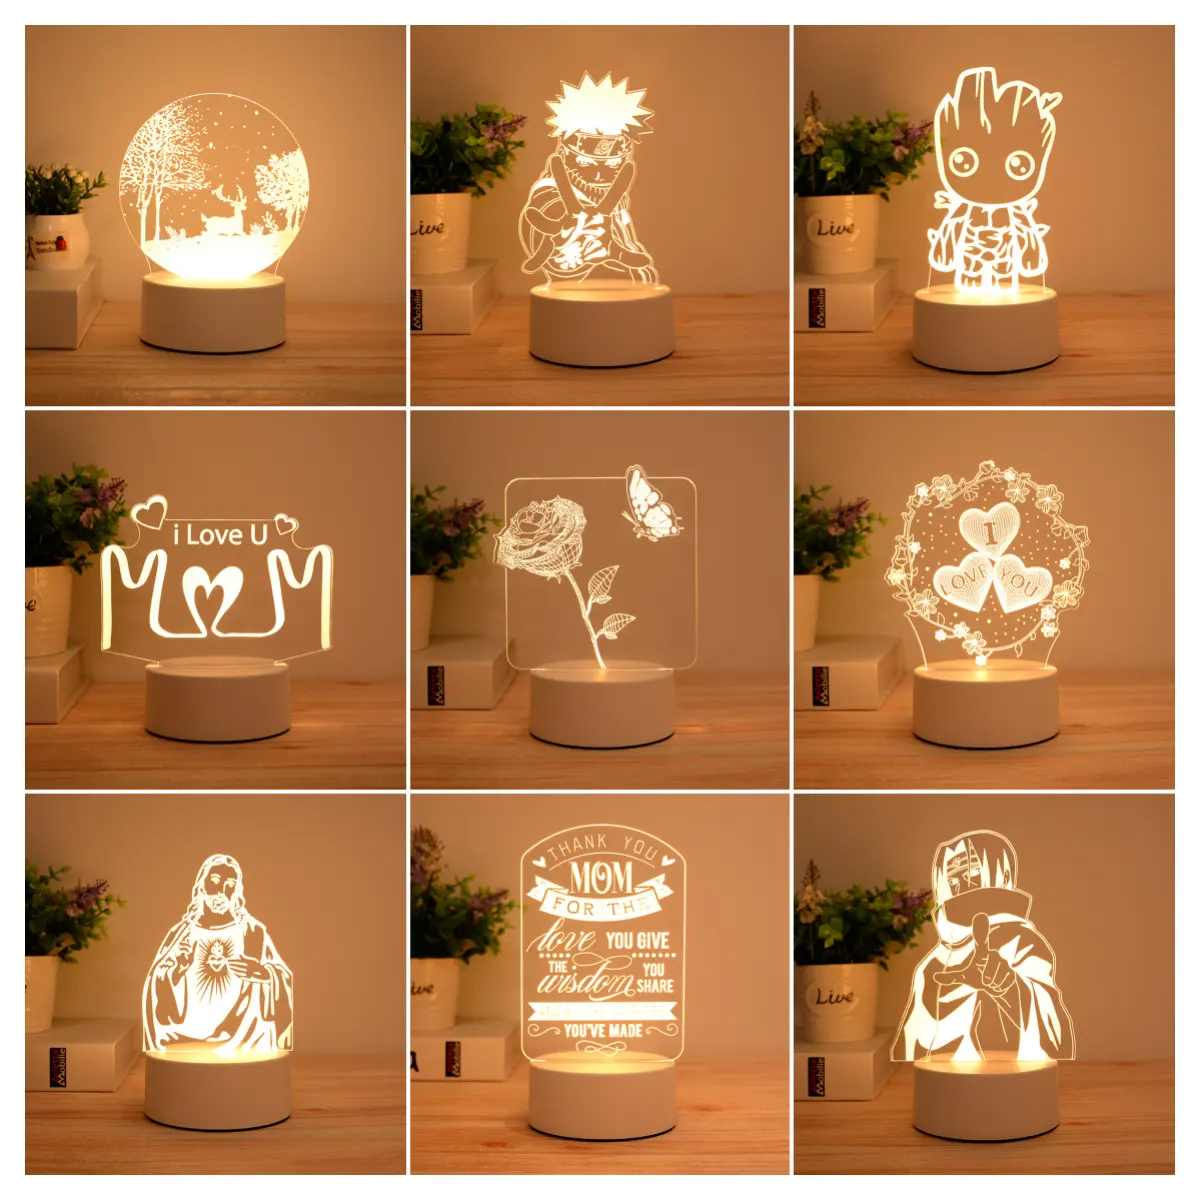 3D אשליה מנורת Led מותאם אישית חדר דקורטיבי ילדי USB אקריליק 3D LED לילה אור שולחן מנורת 3D אורות לילדים מתנה